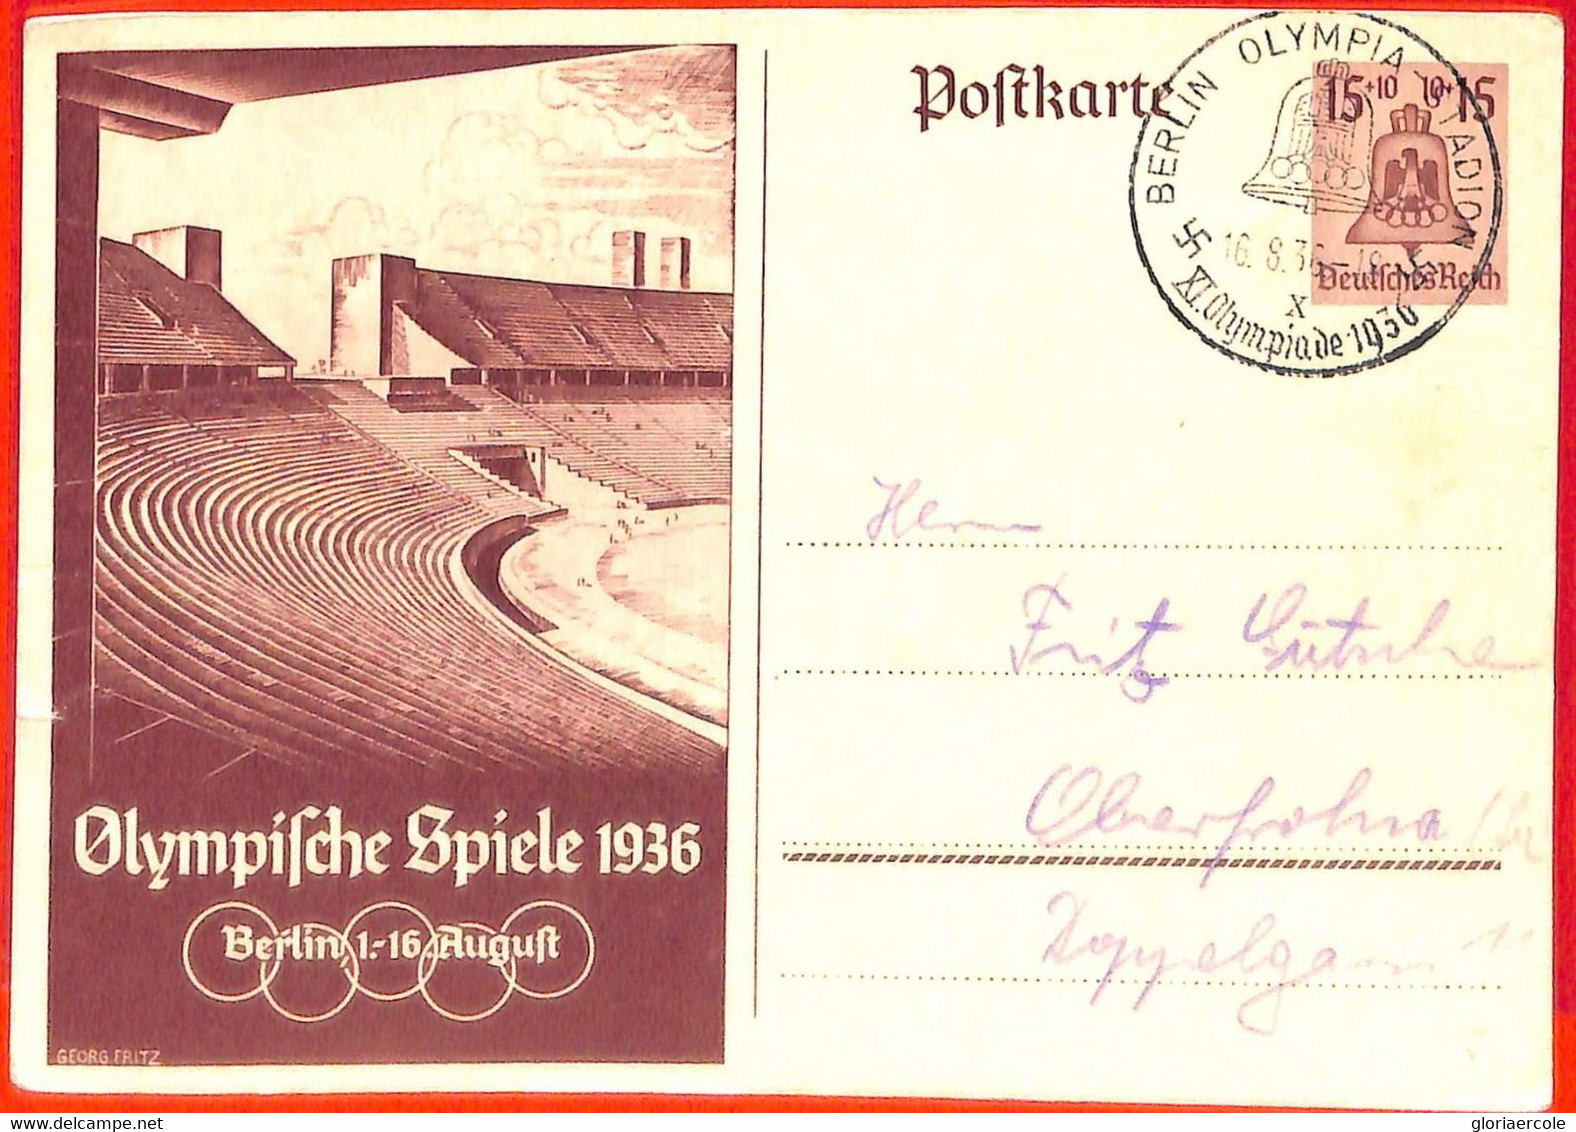 Aa2573 - Germany - POSTAL HISTORY - 1936 Olympic Games SPECIAL POSTMARK Football - Ete 1936: Berlin